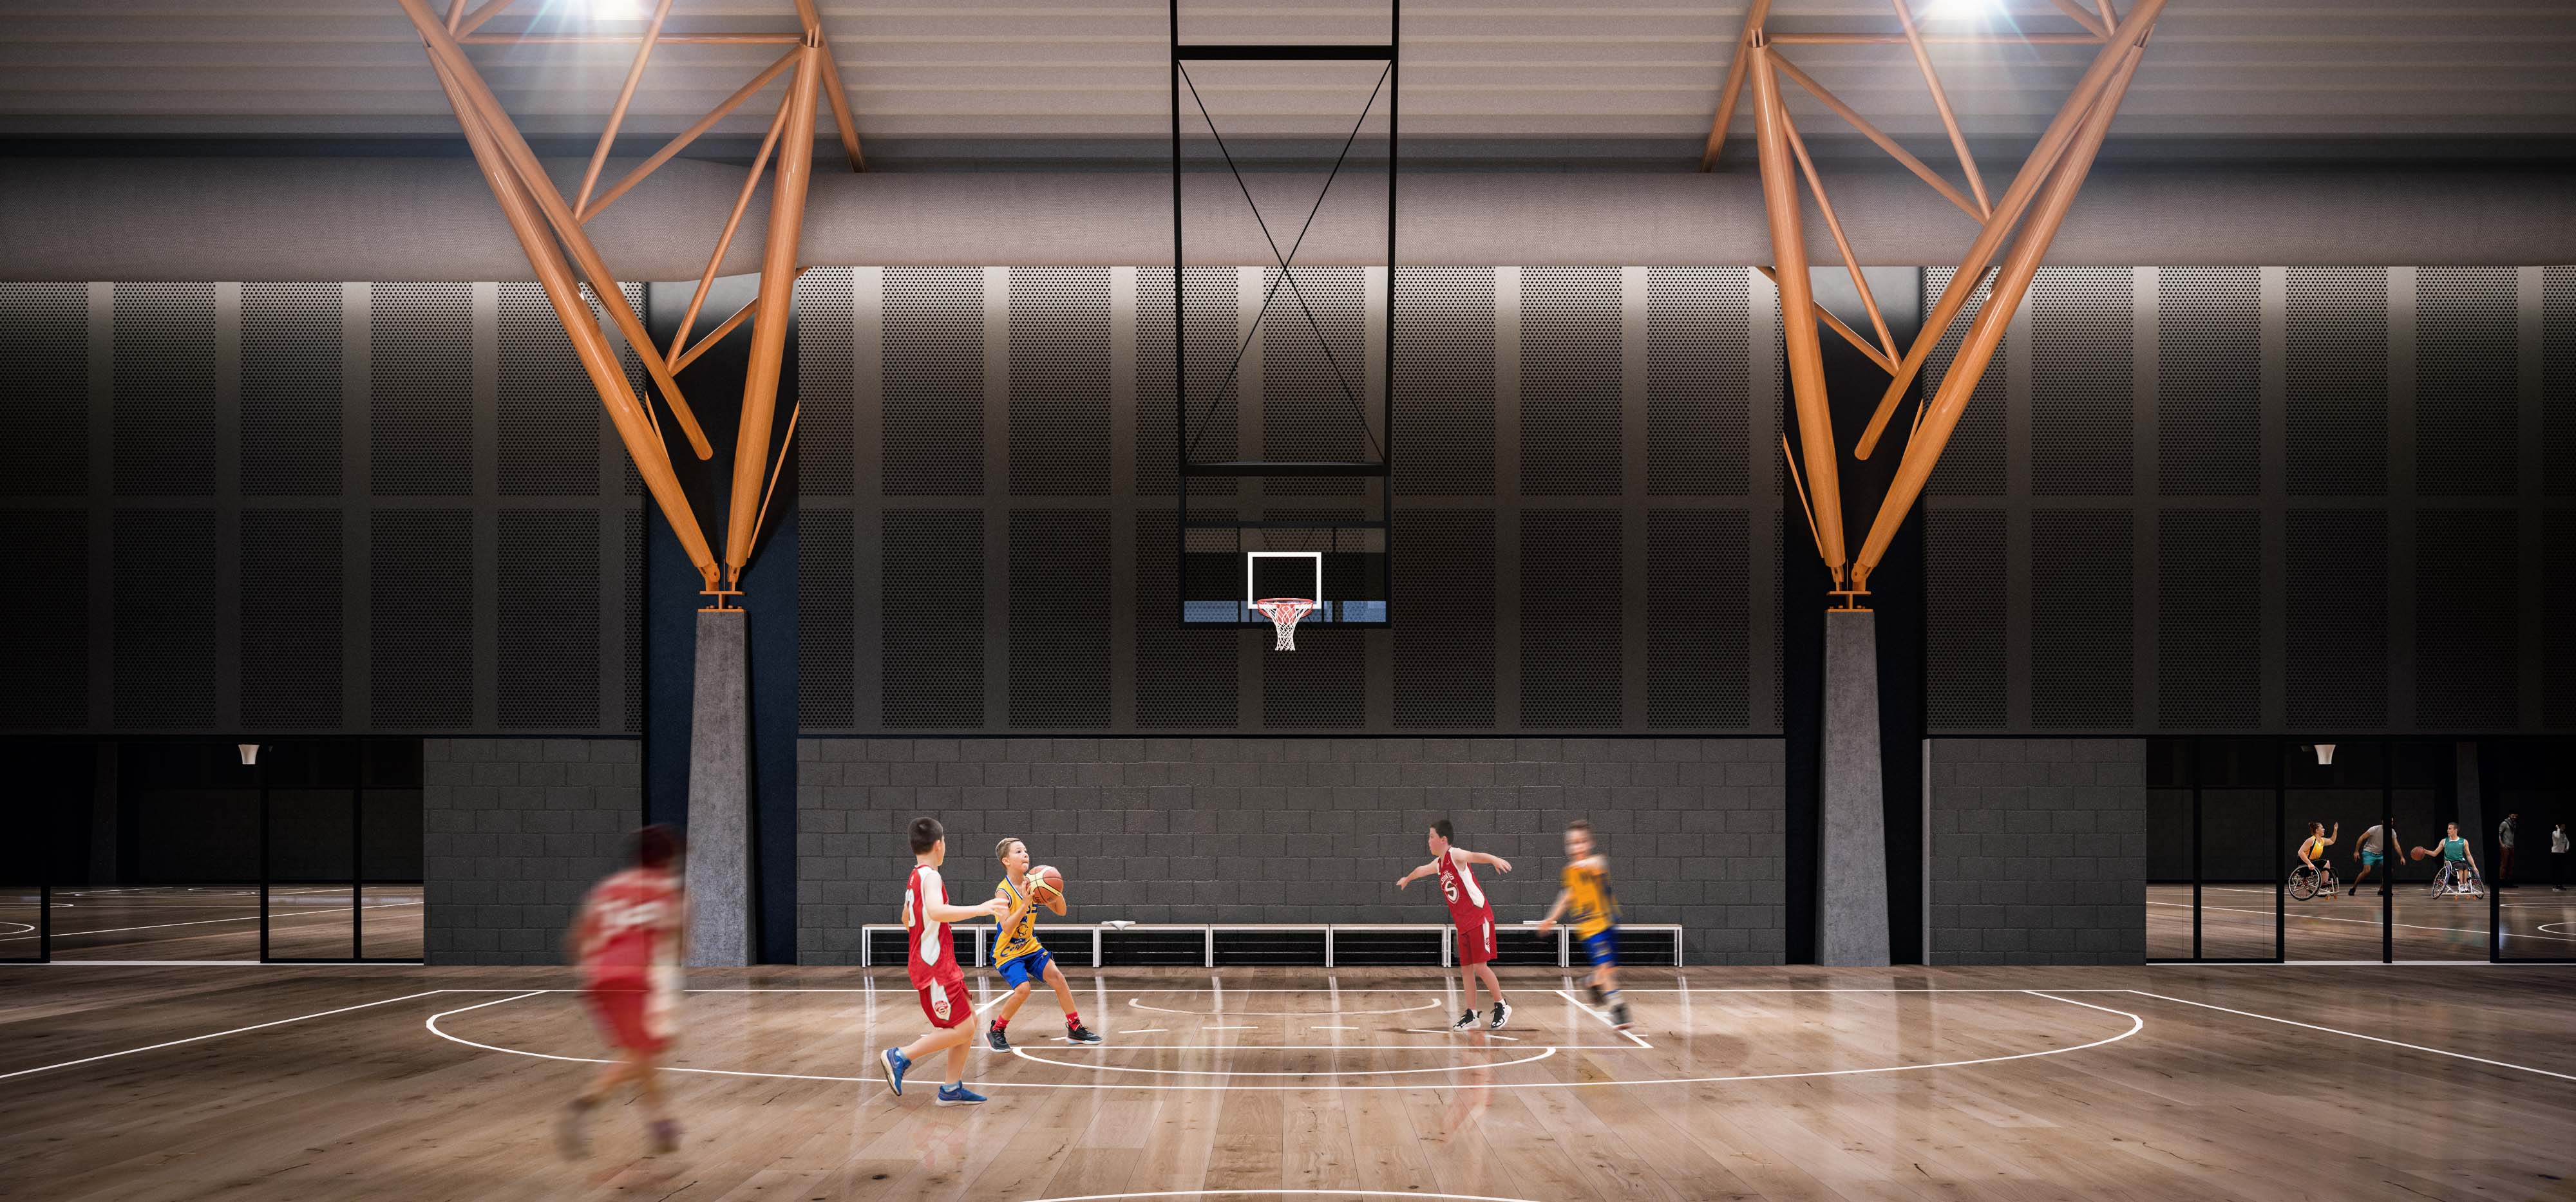 Basketball Court V1 Update R2 (1) Copy